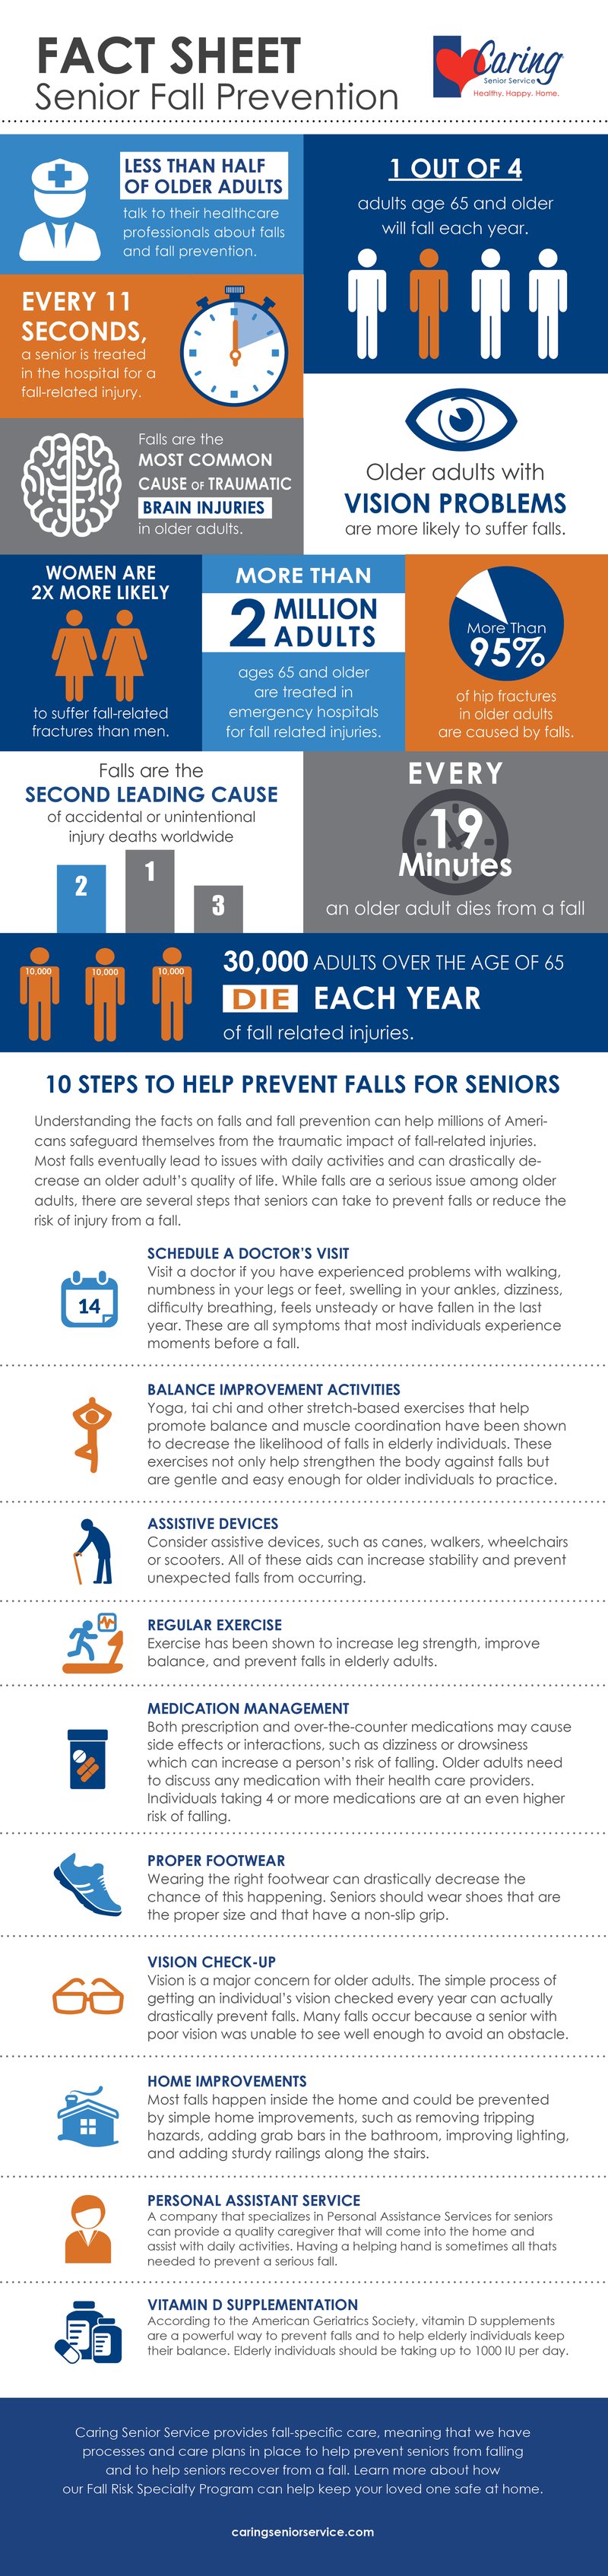 Fall Prevention Fact Sheet